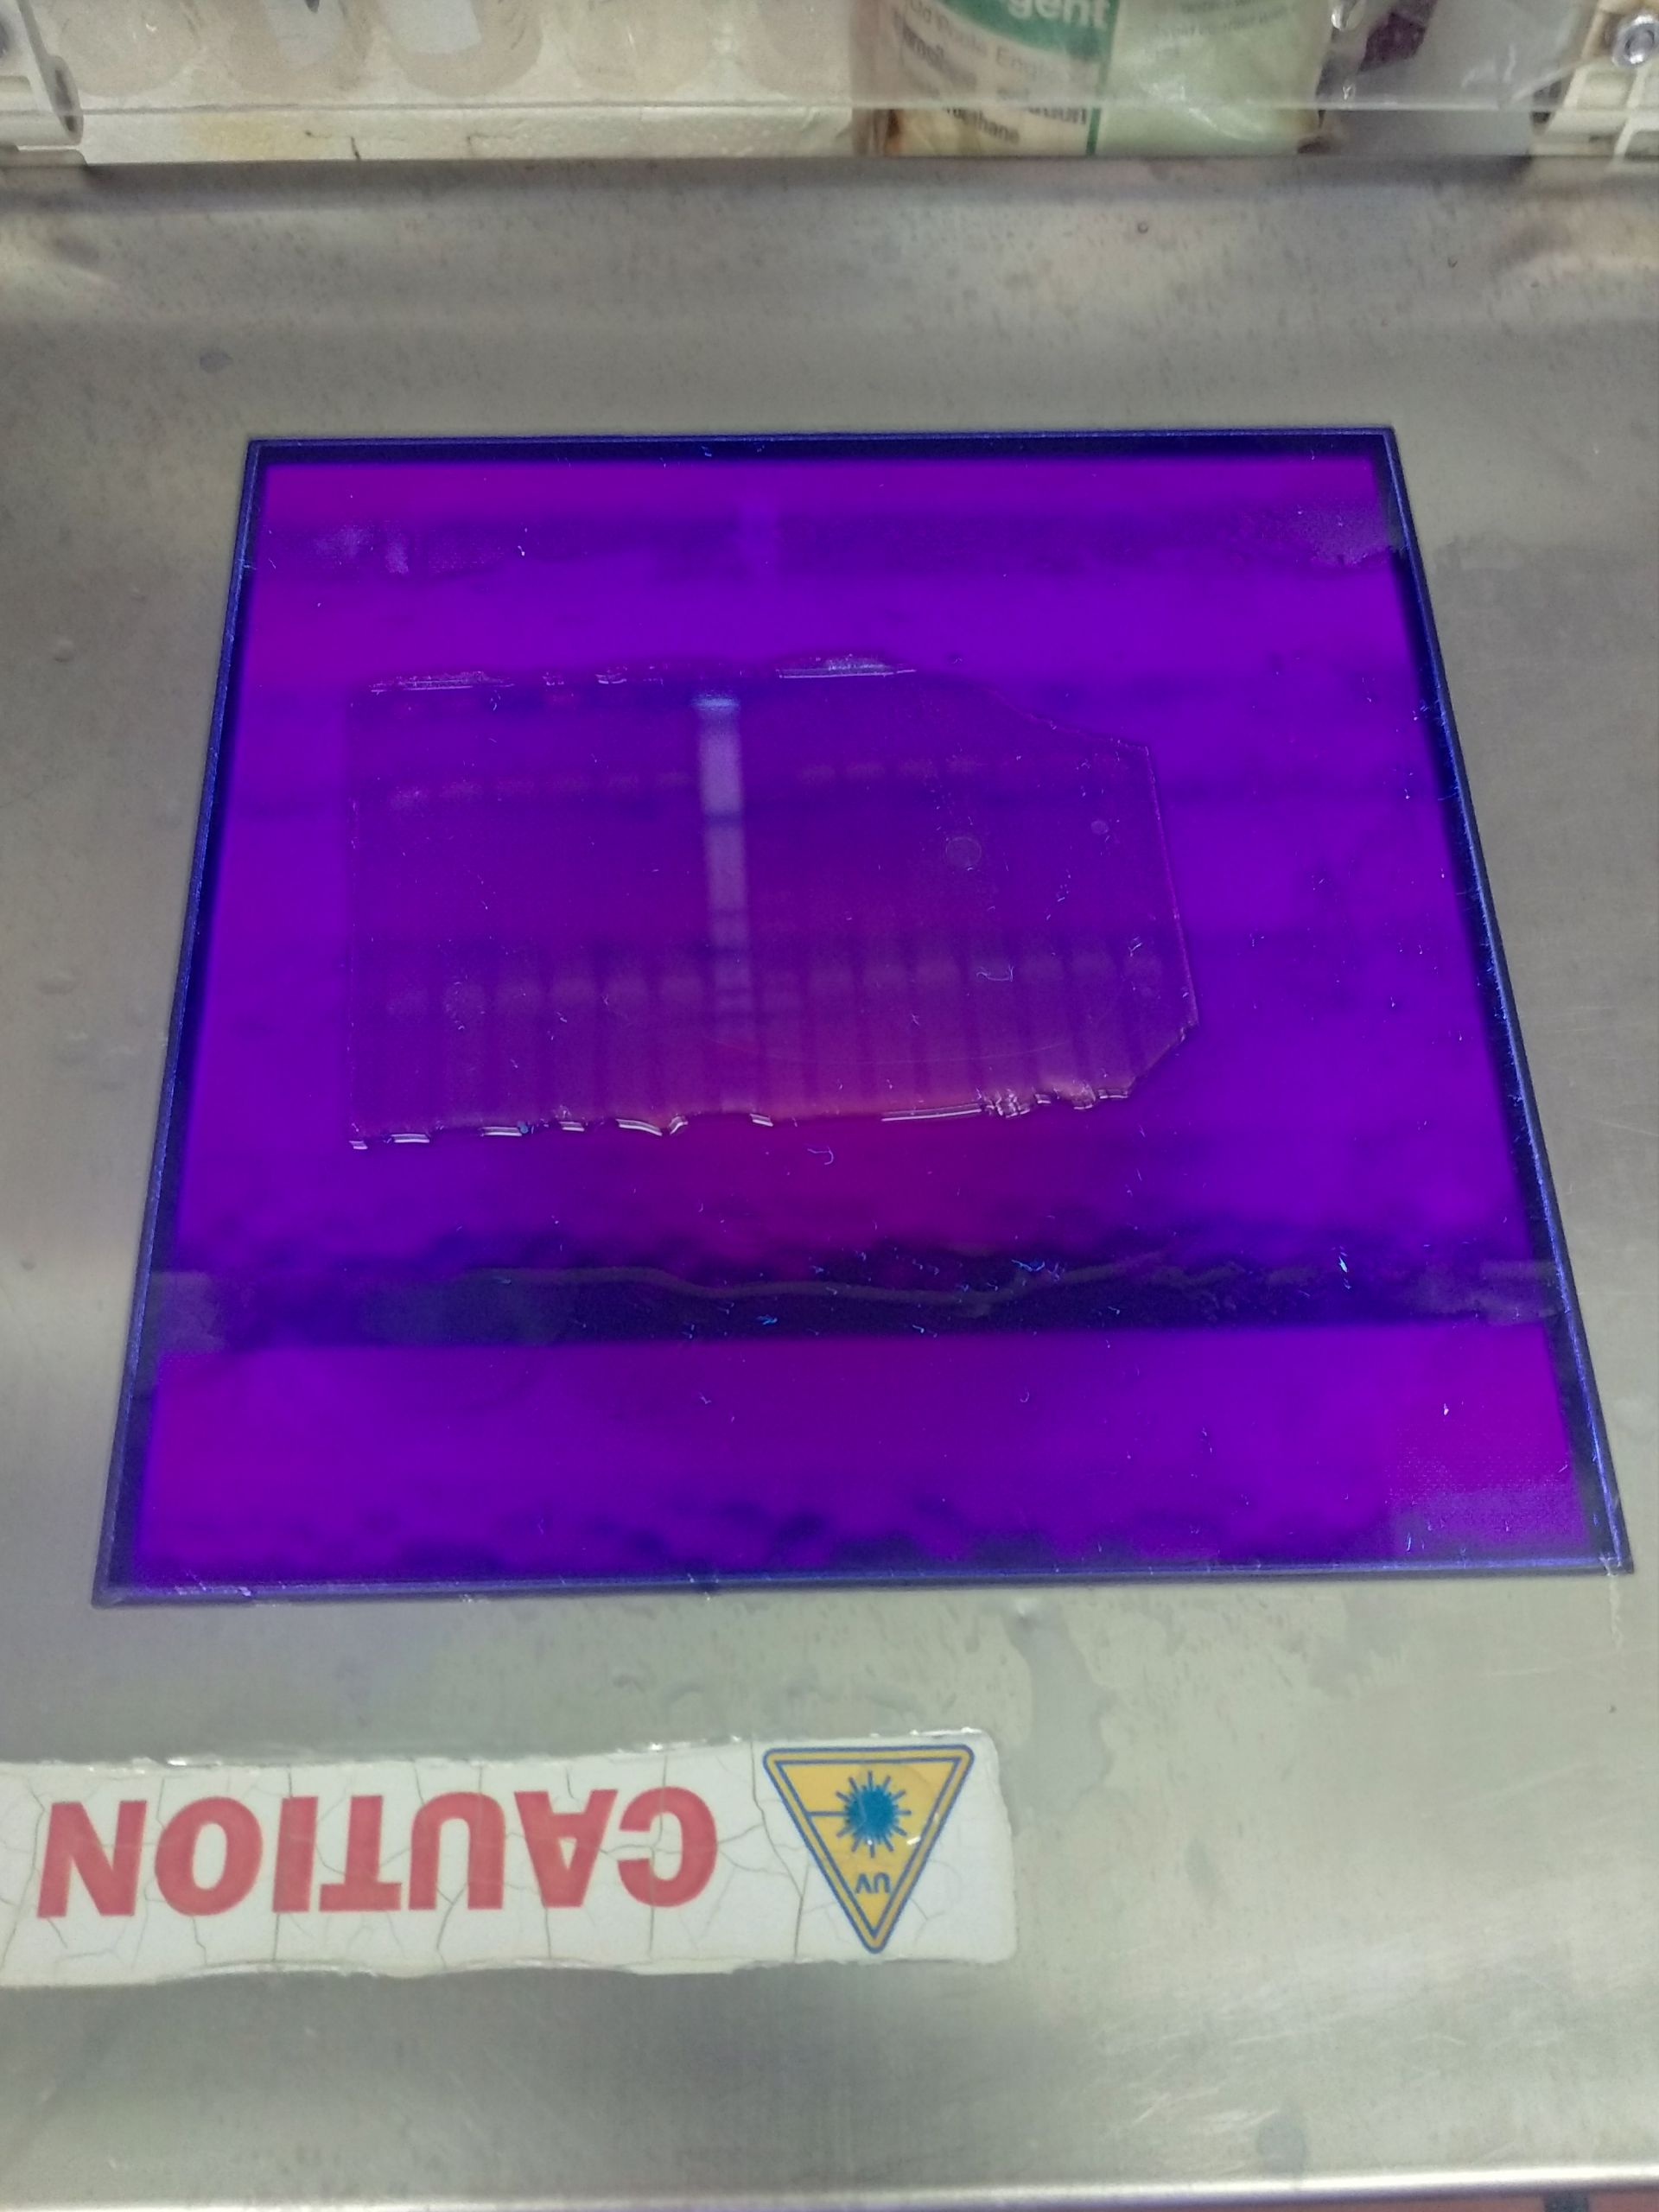 view of the gel on the UV transilluminator